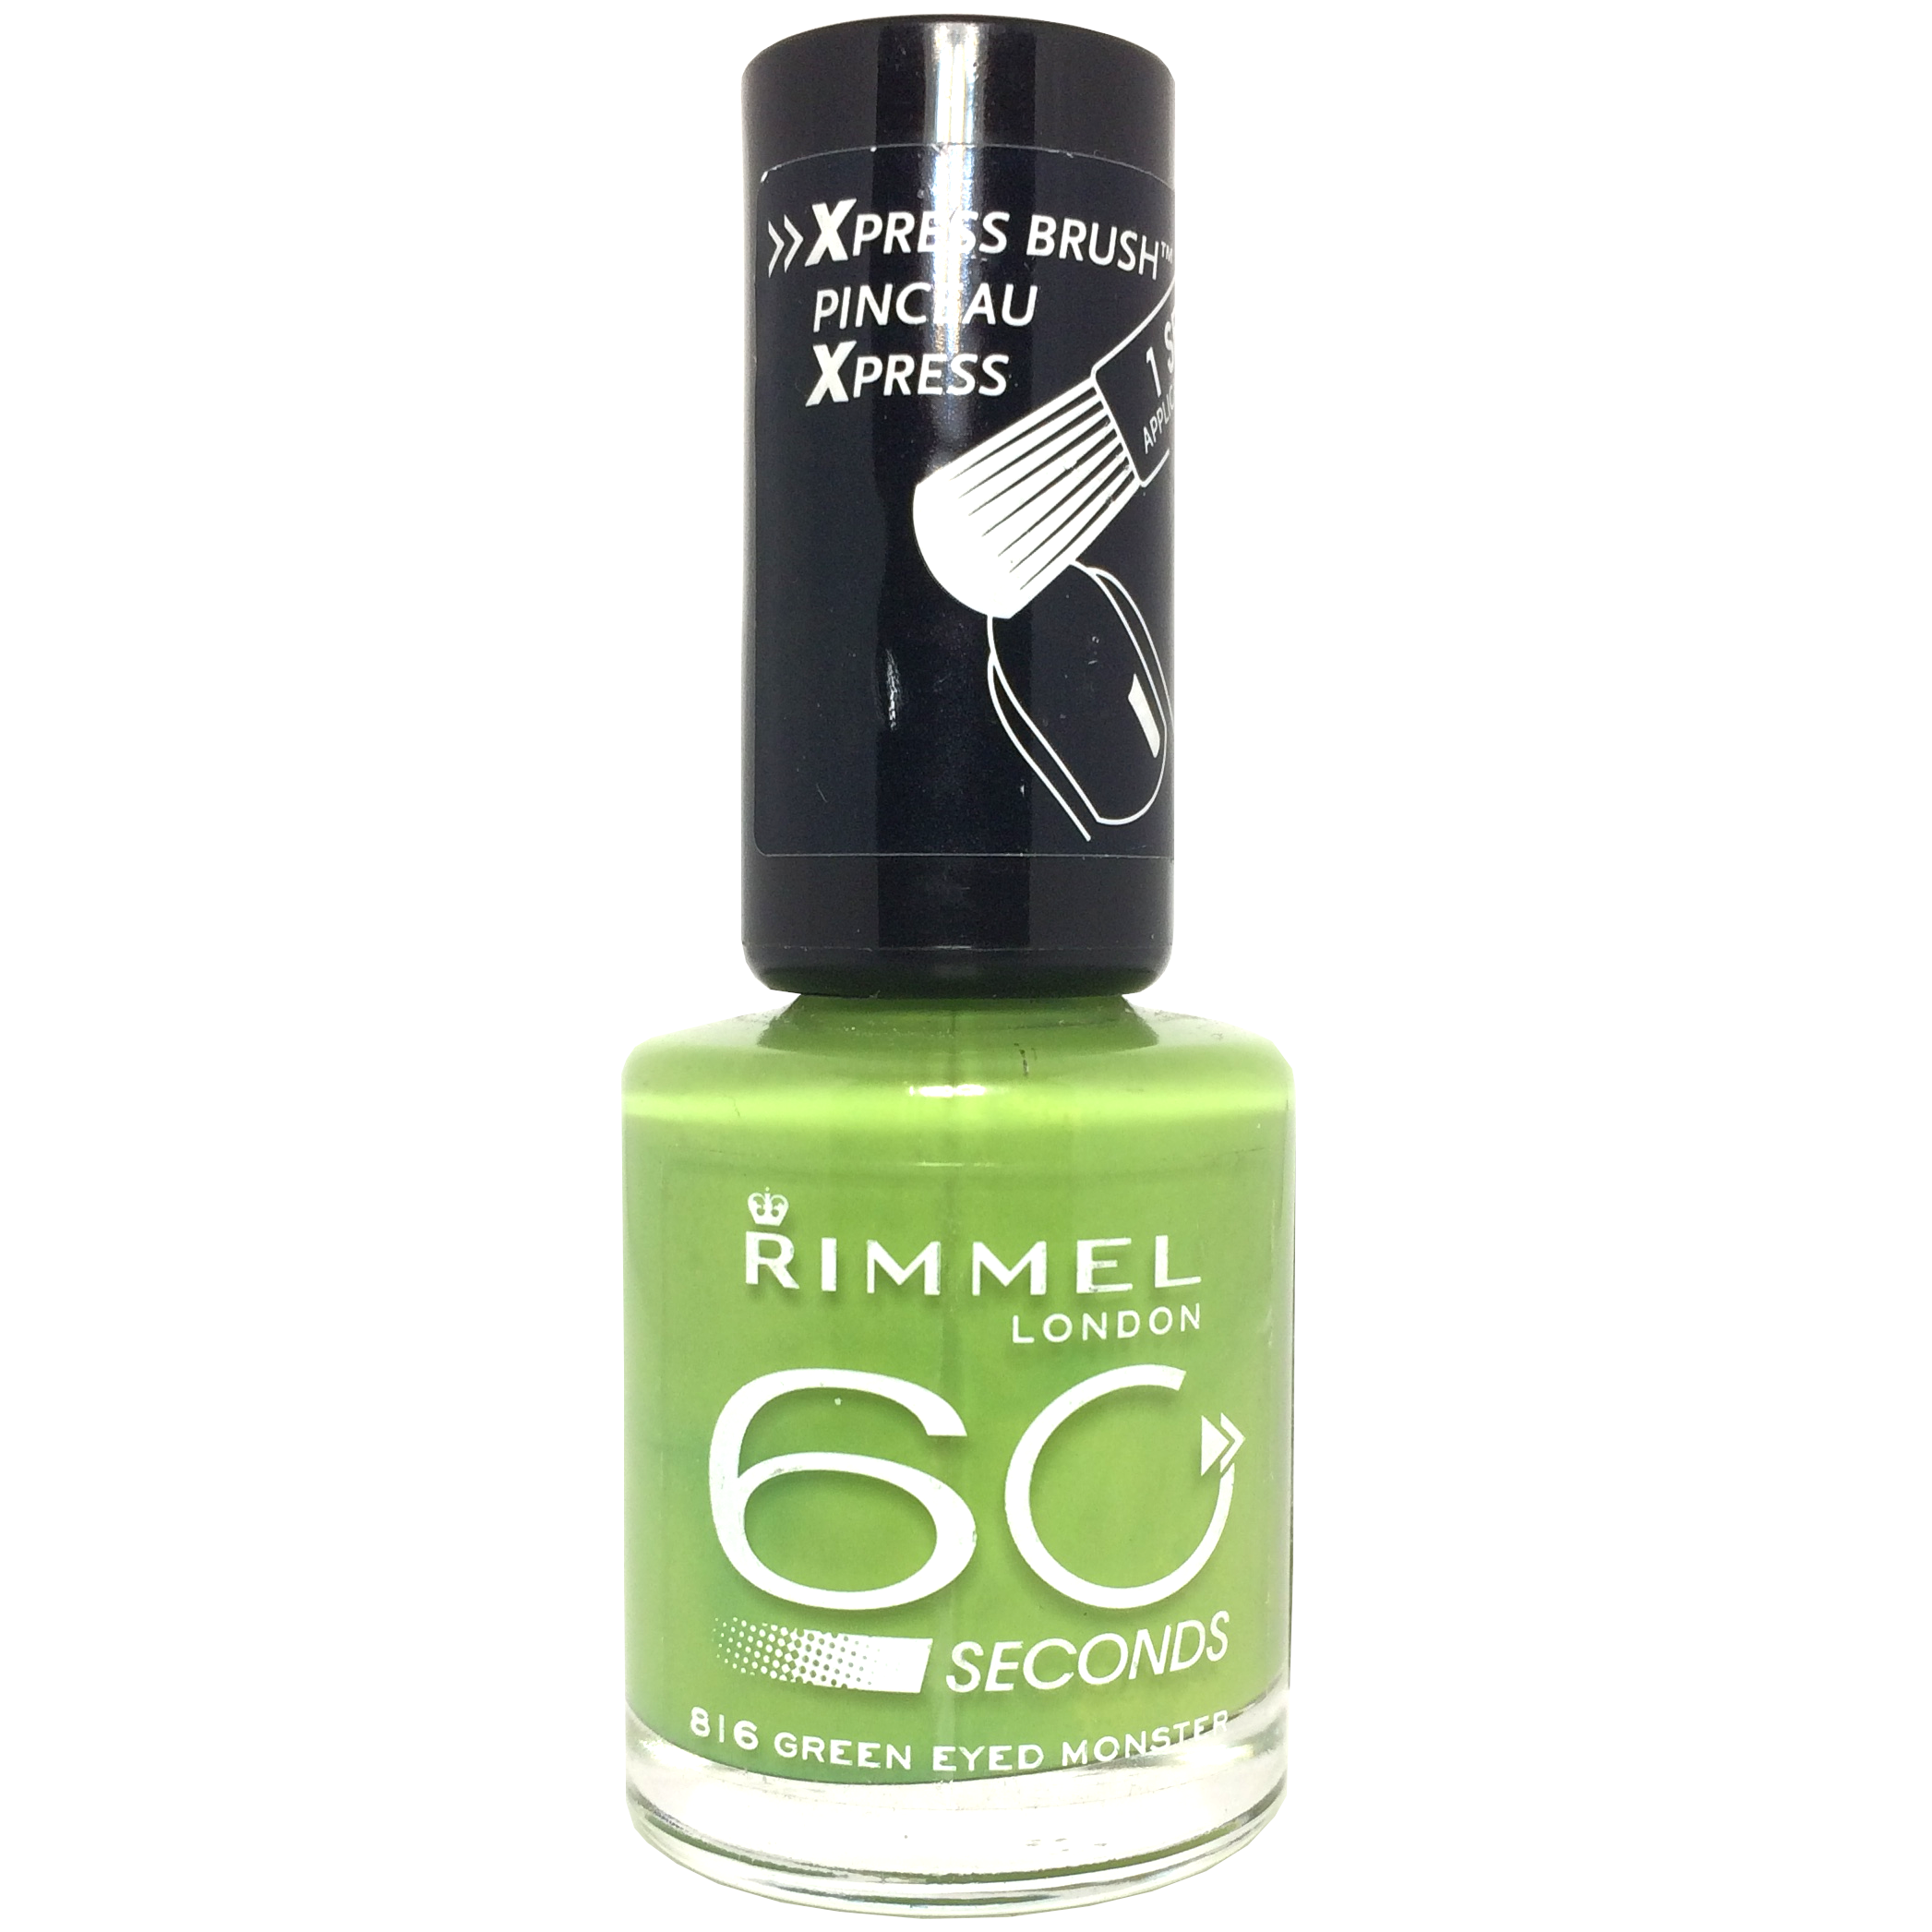 Rimmel 60 Seconds Nail Polish - 816 Green Eyed Monster - £